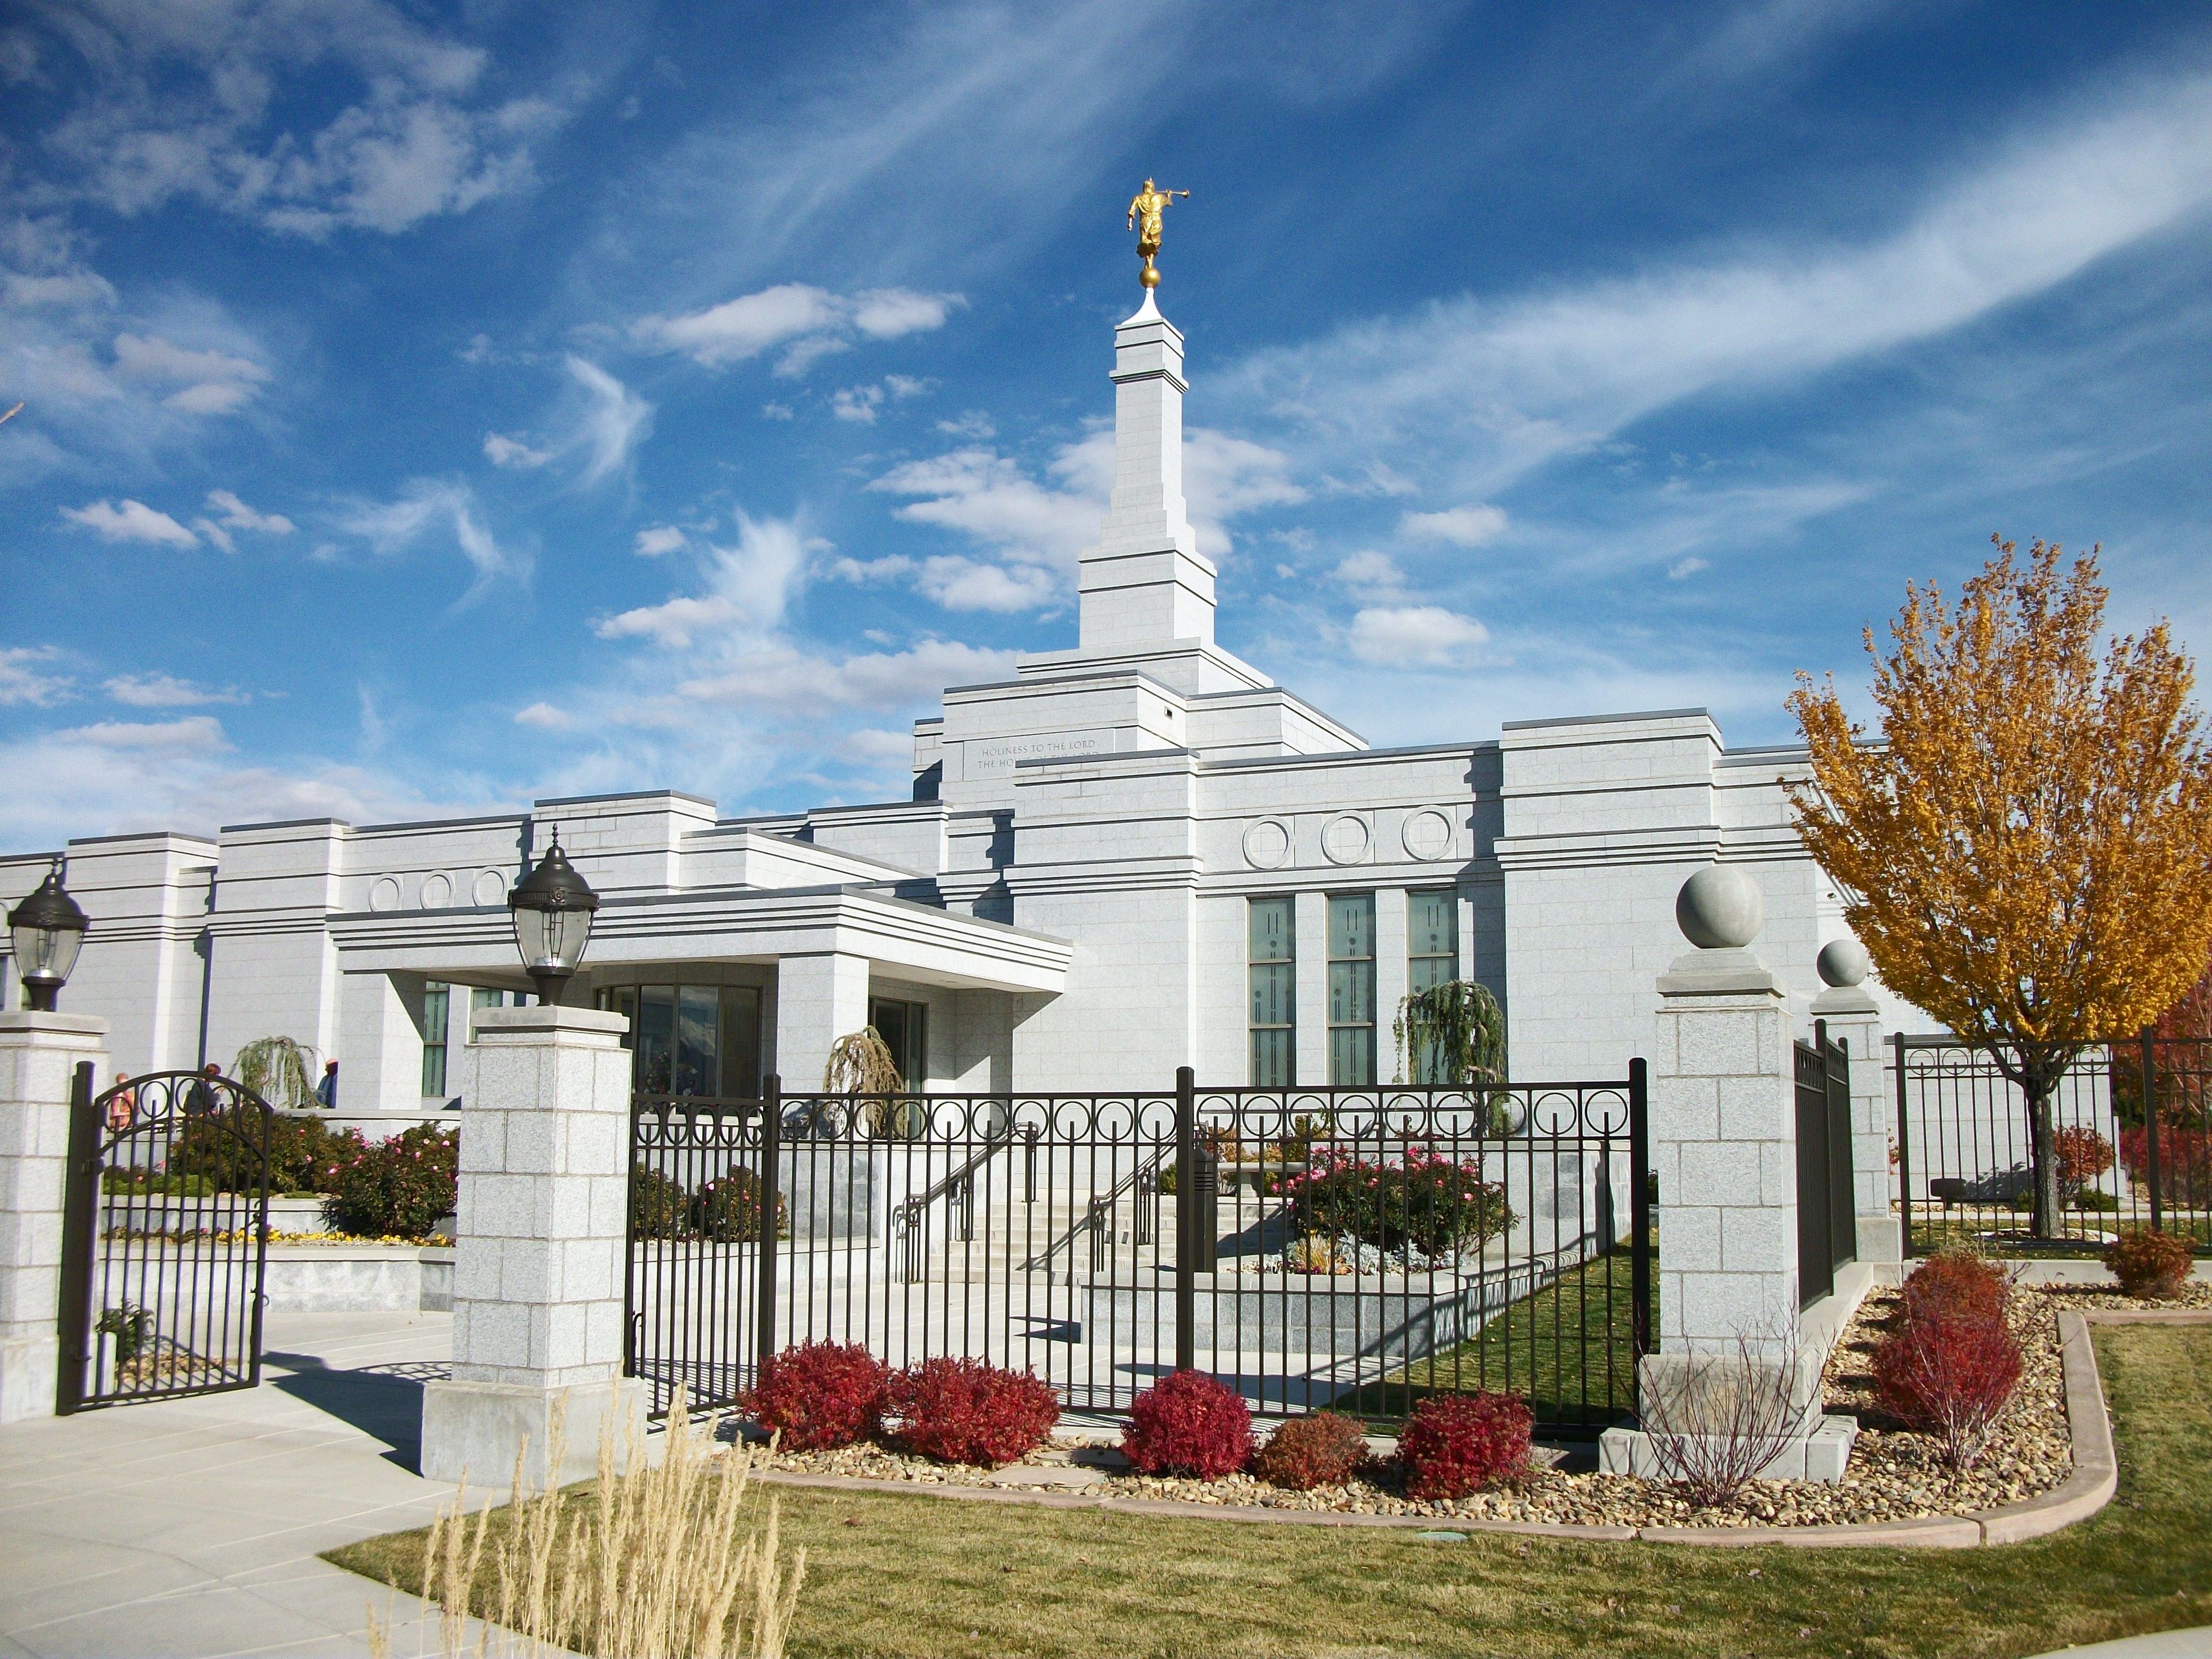 The Reno Nevada Temple entrance, including scenery.